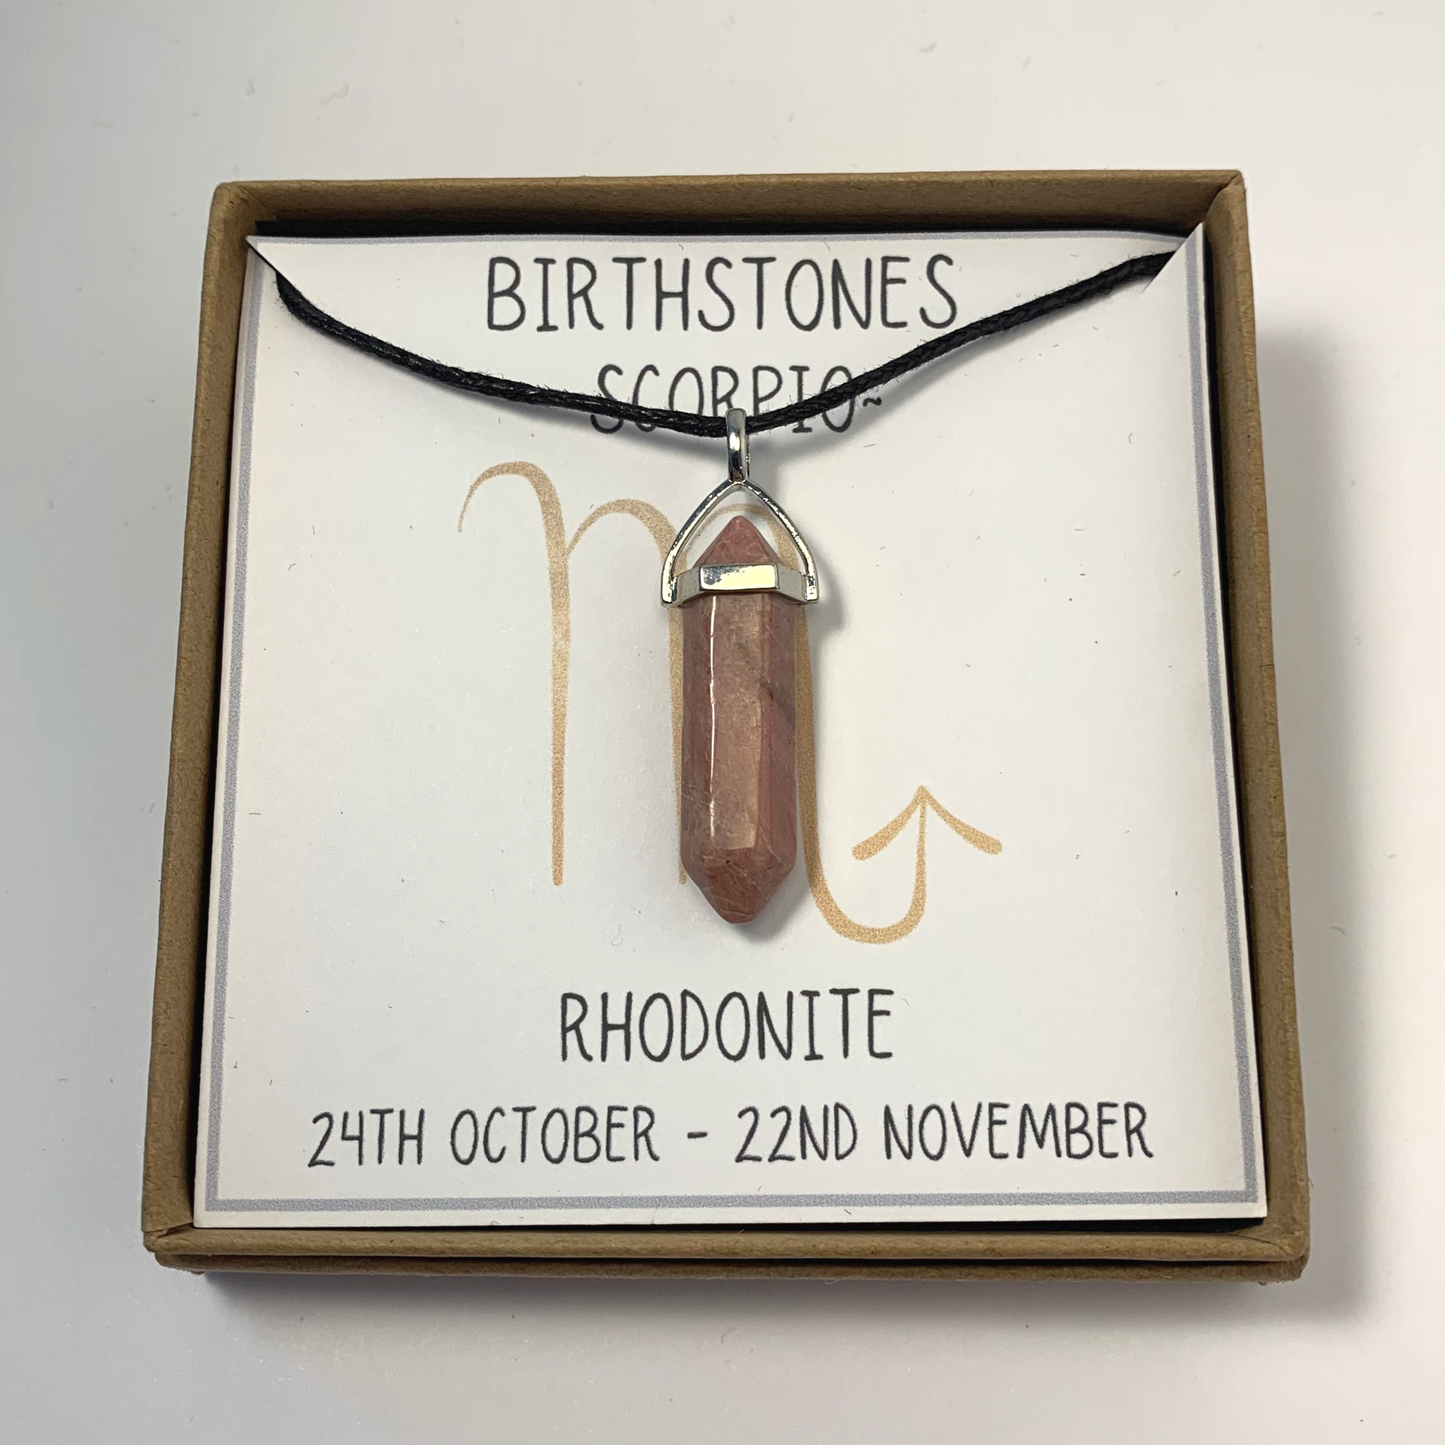 Scorpio - Rhodonite Birthstone Pendant (24th October - 22nd November)